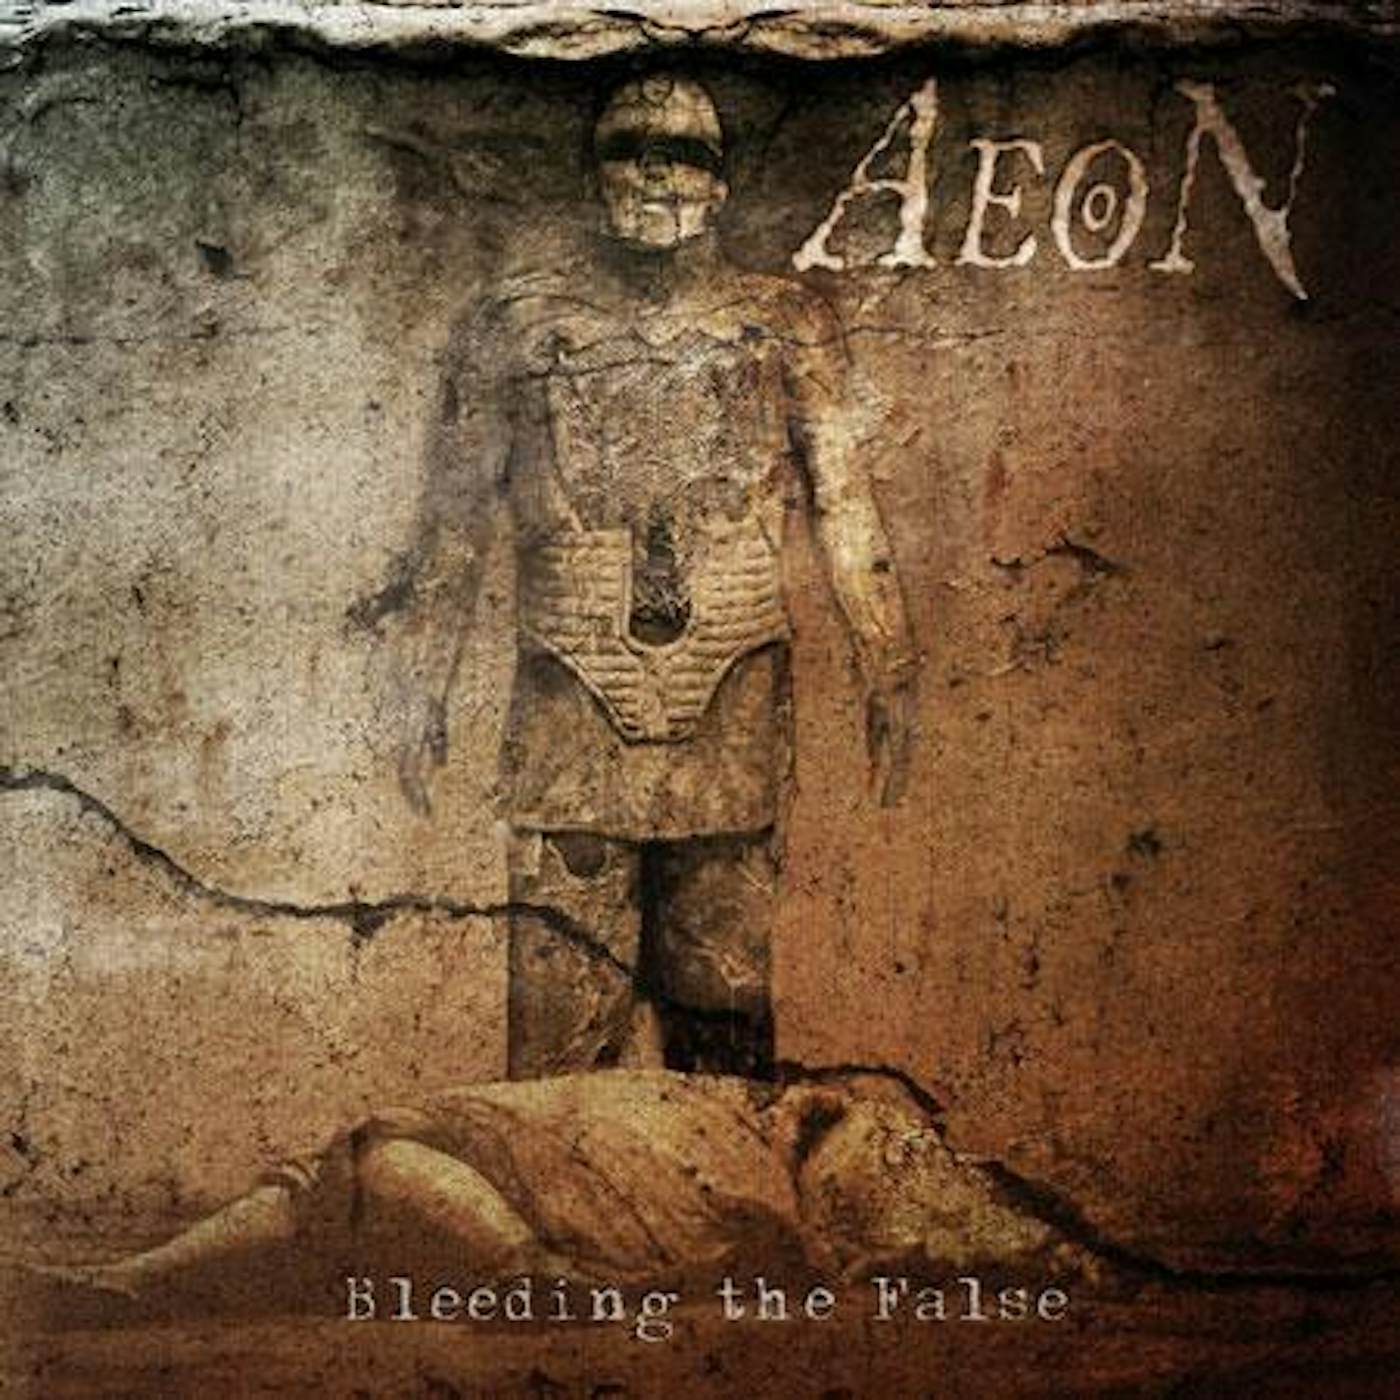 Aeon "Bleeding The False" CD